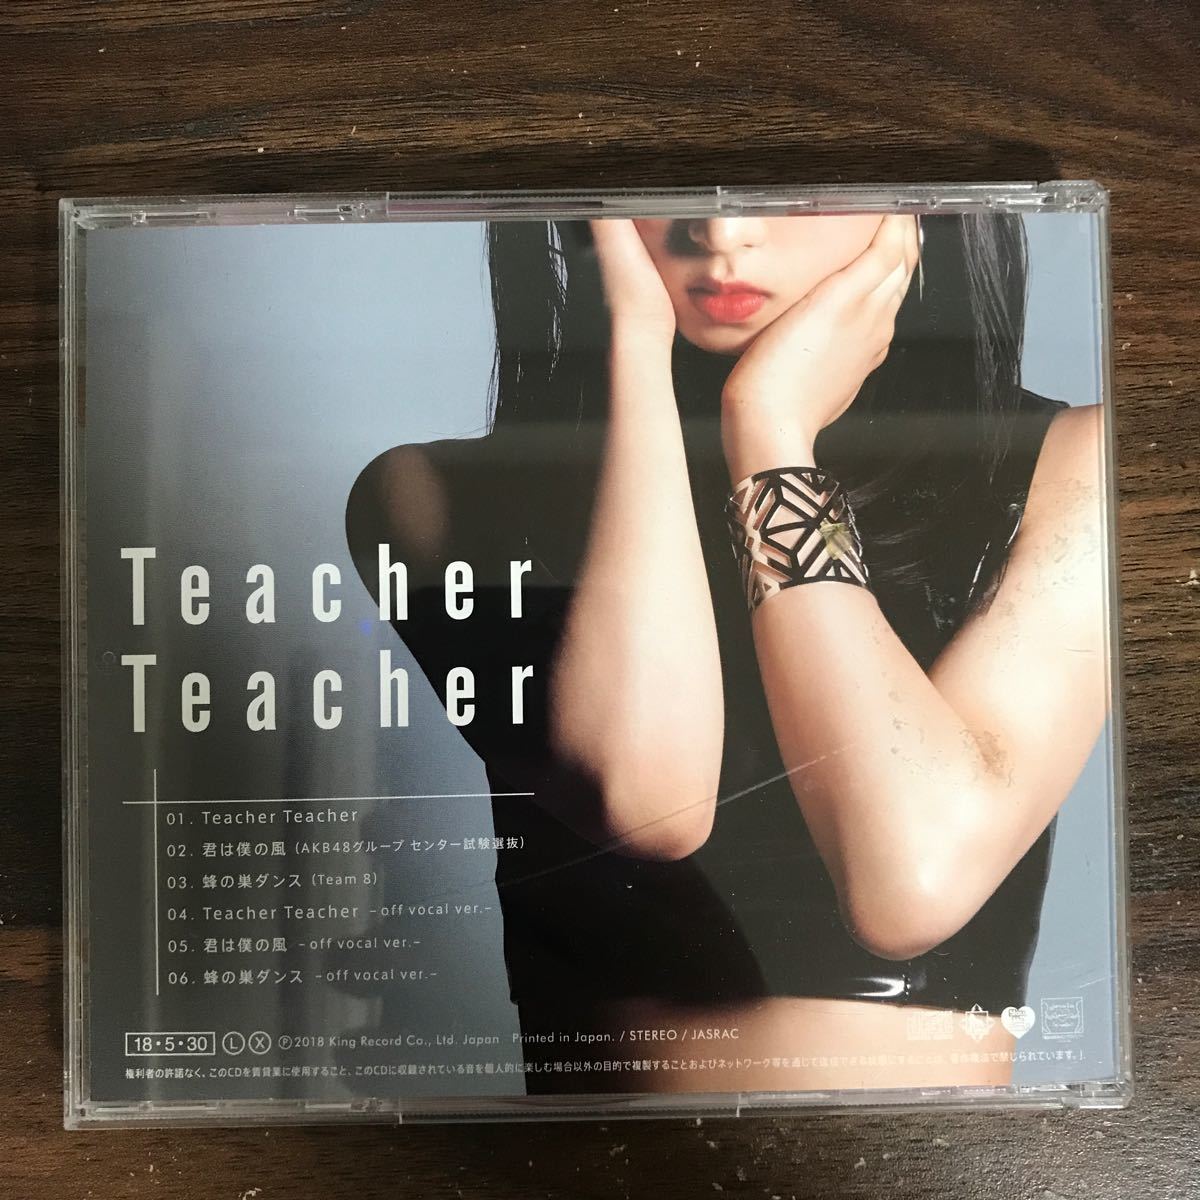 (B467)帯付 中古CD150円 AKB48 52nd Single「Teacher Teacher」 (劇場盤)_画像2